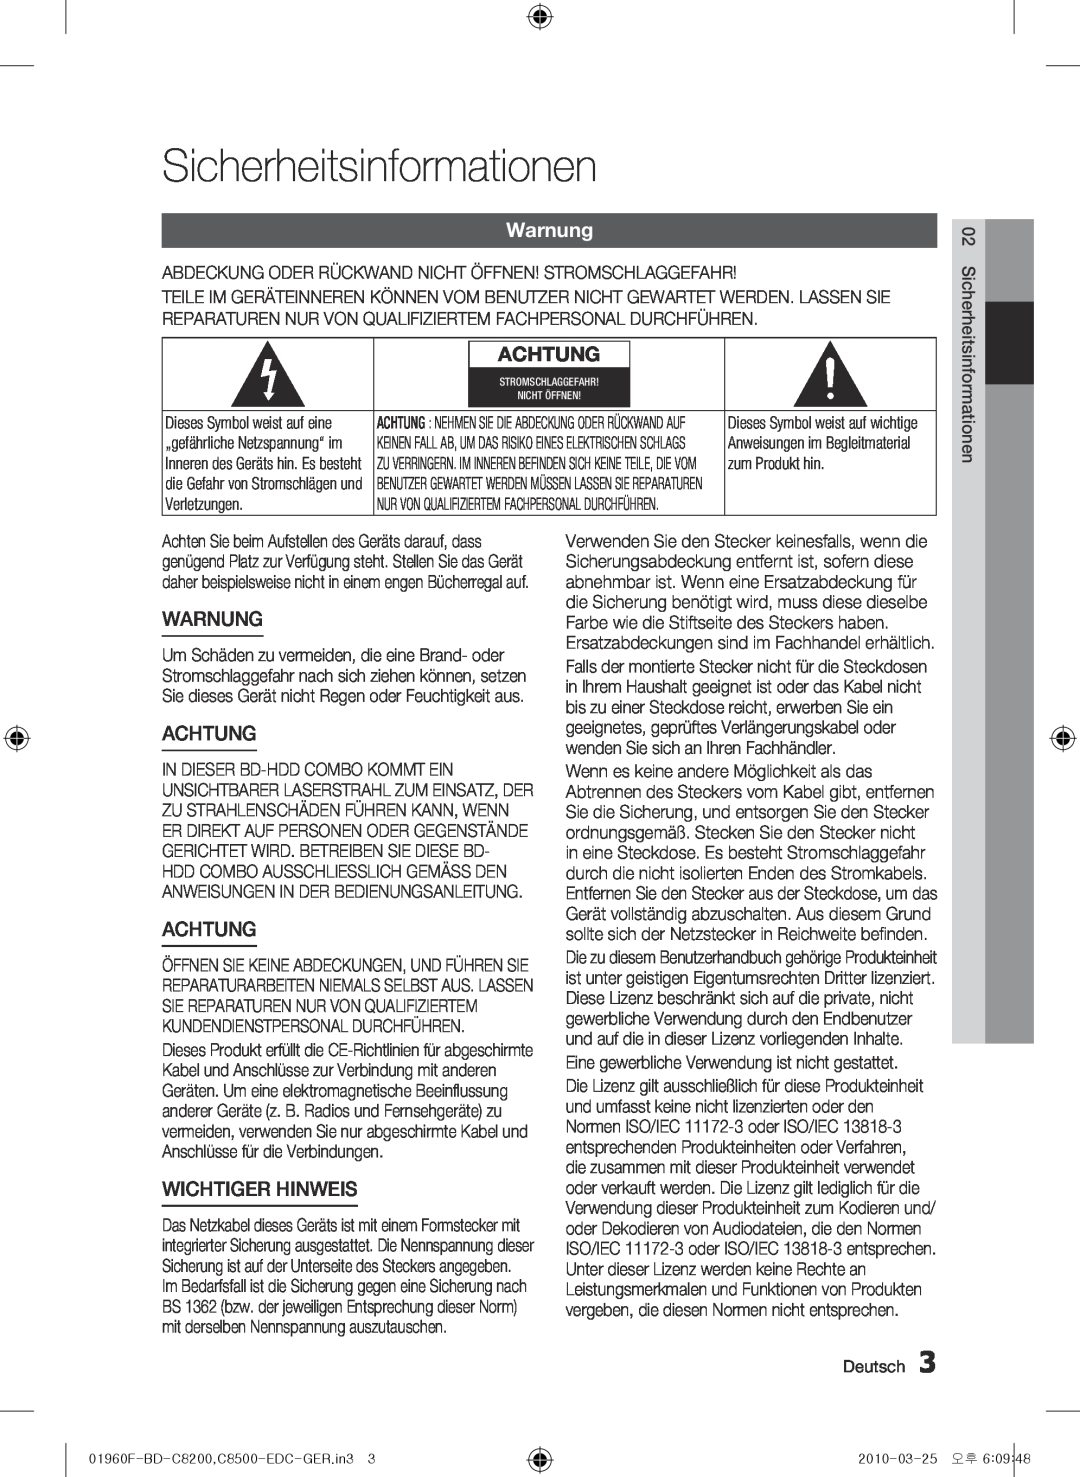 Samsung BD-C8500/XEN manual Sicherheitsinformationen, Warnung, Achtung, Wichtiger Hinweis, zum Produkt hin, Verletzungen 